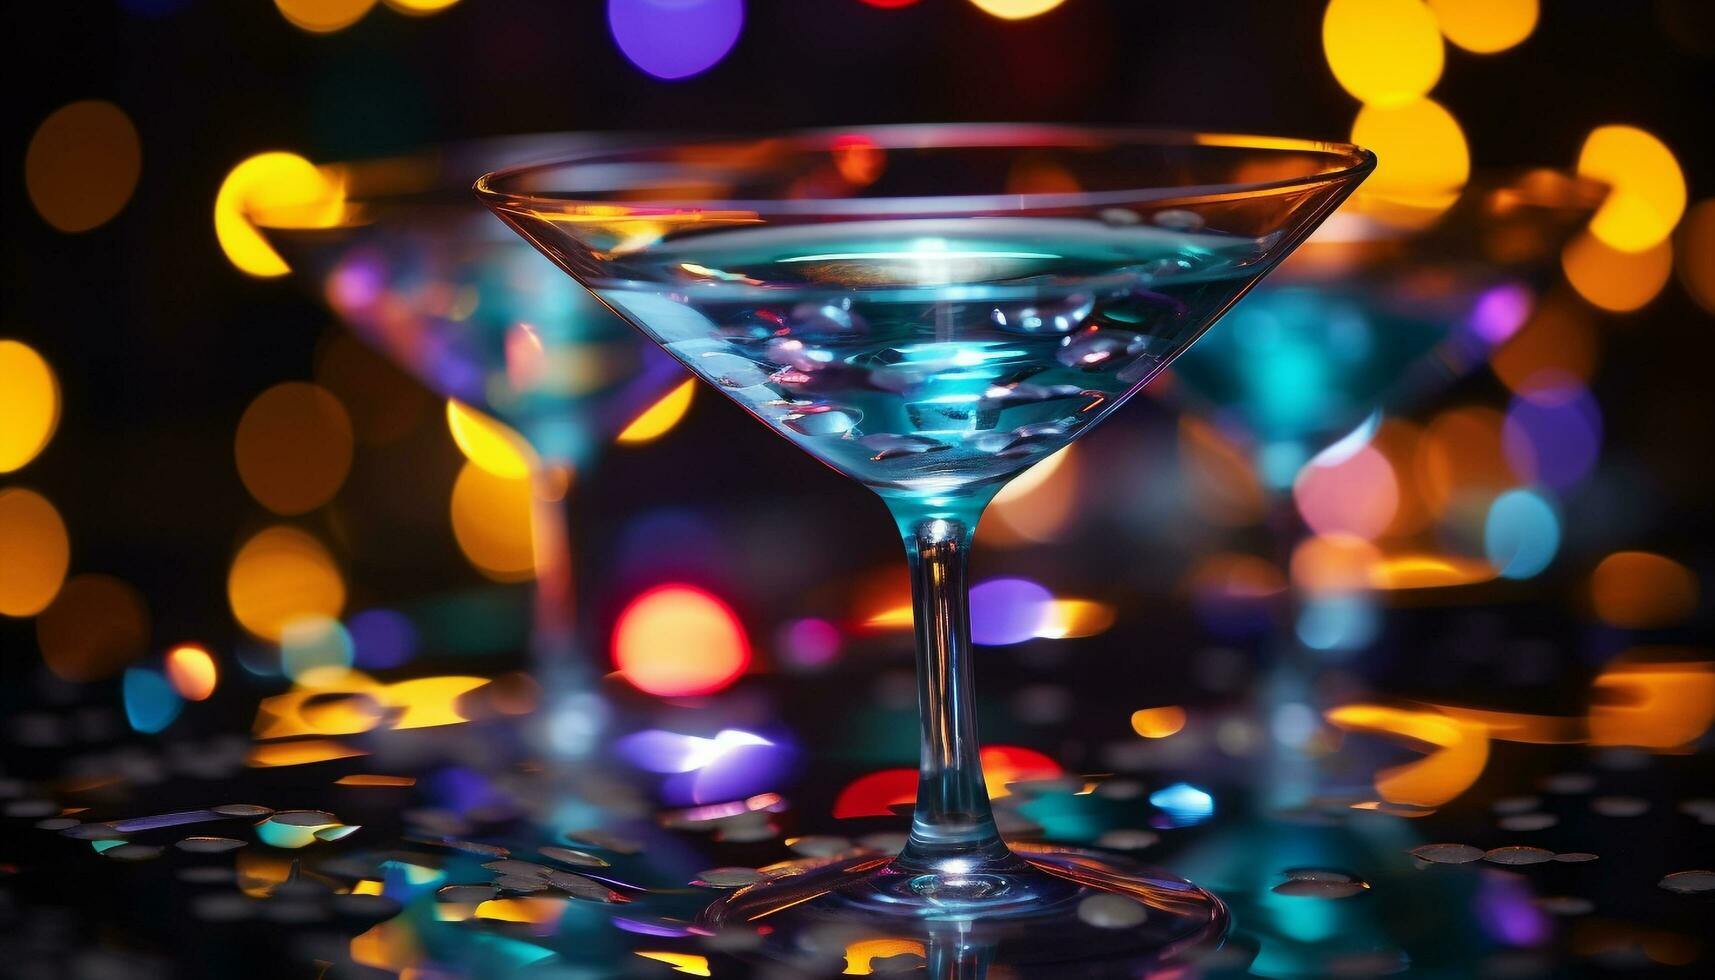 AI generated Nightclub celebration, martini glass illuminated with vibrant glowing light generated by AI photo